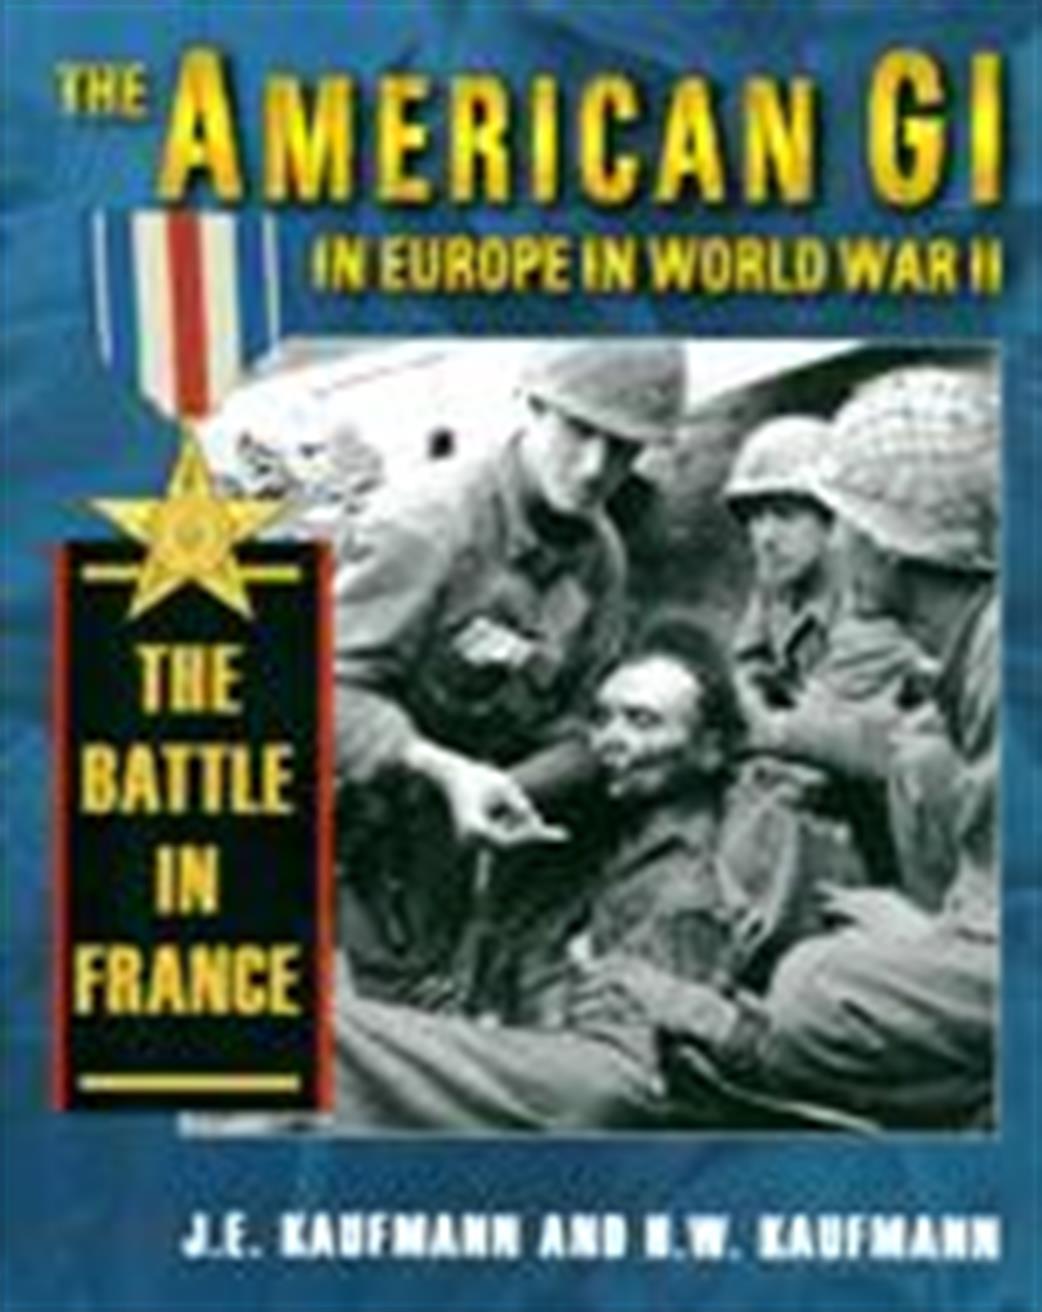 9780811705264 The Battle in France - The American GI In Europe In World War II by J & H Kaufmann  1/10